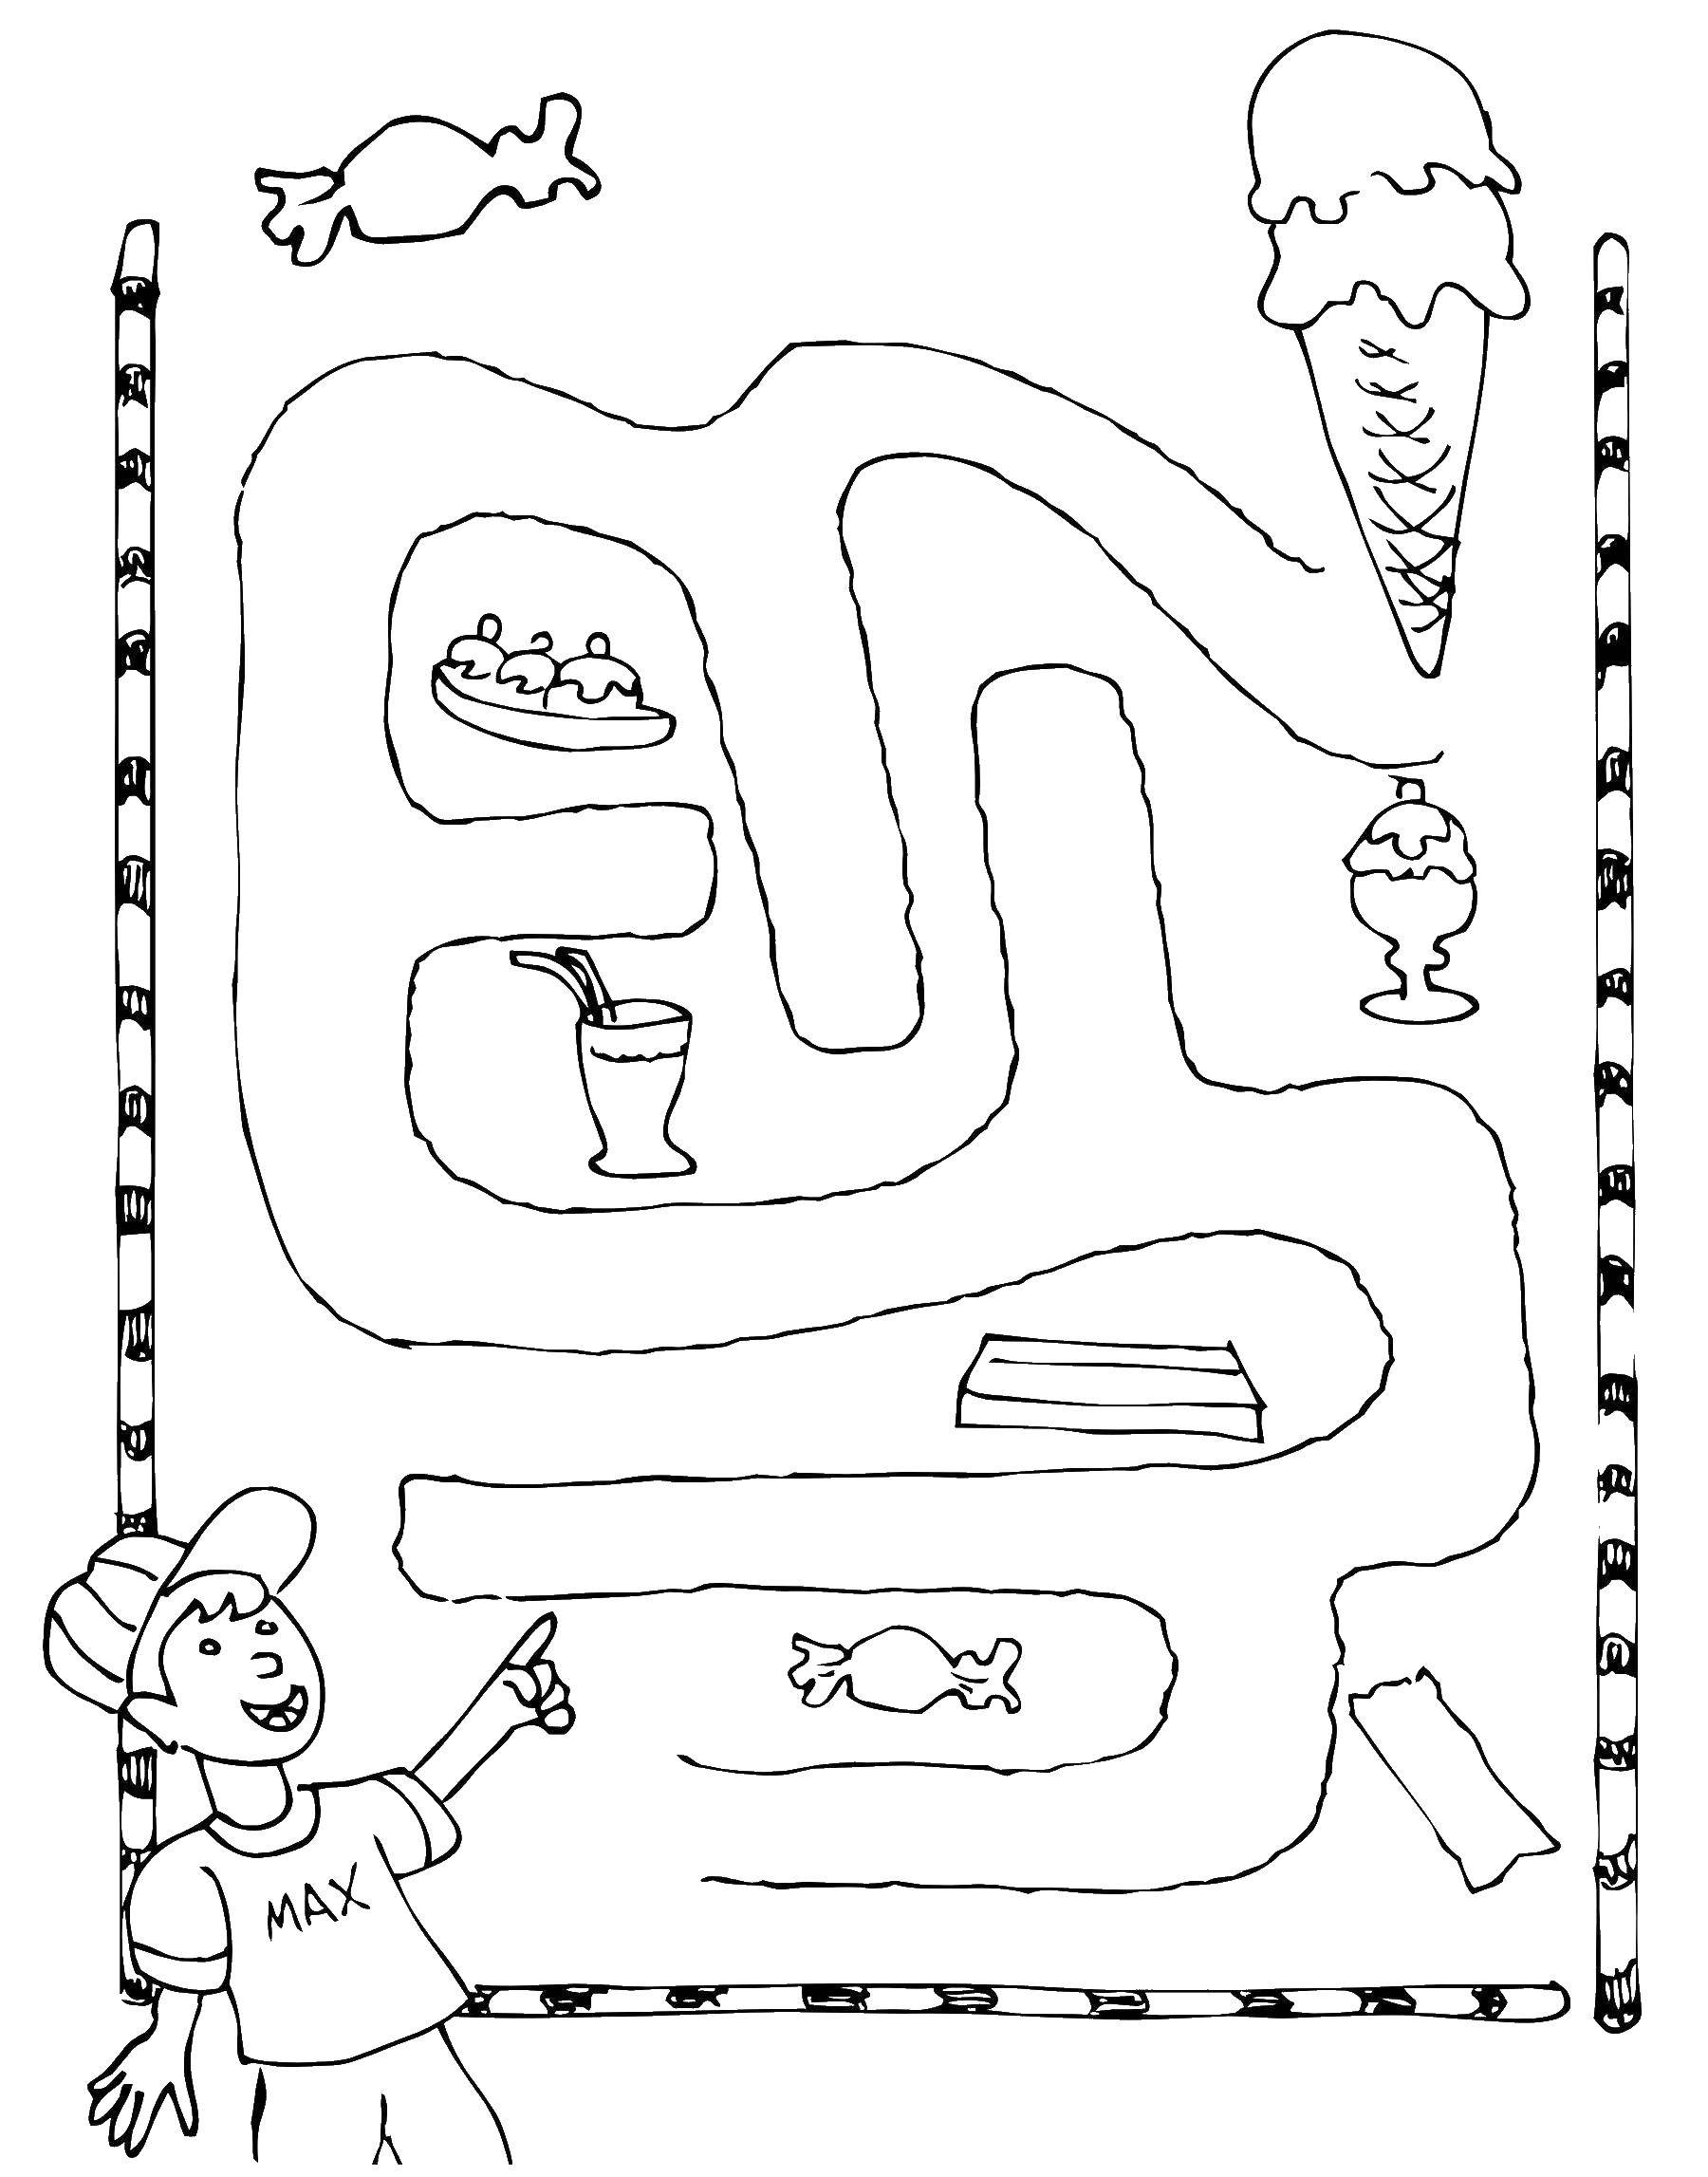 Coloring Maze of ice cream. Category ice cream. Tags:  ice cream maze.